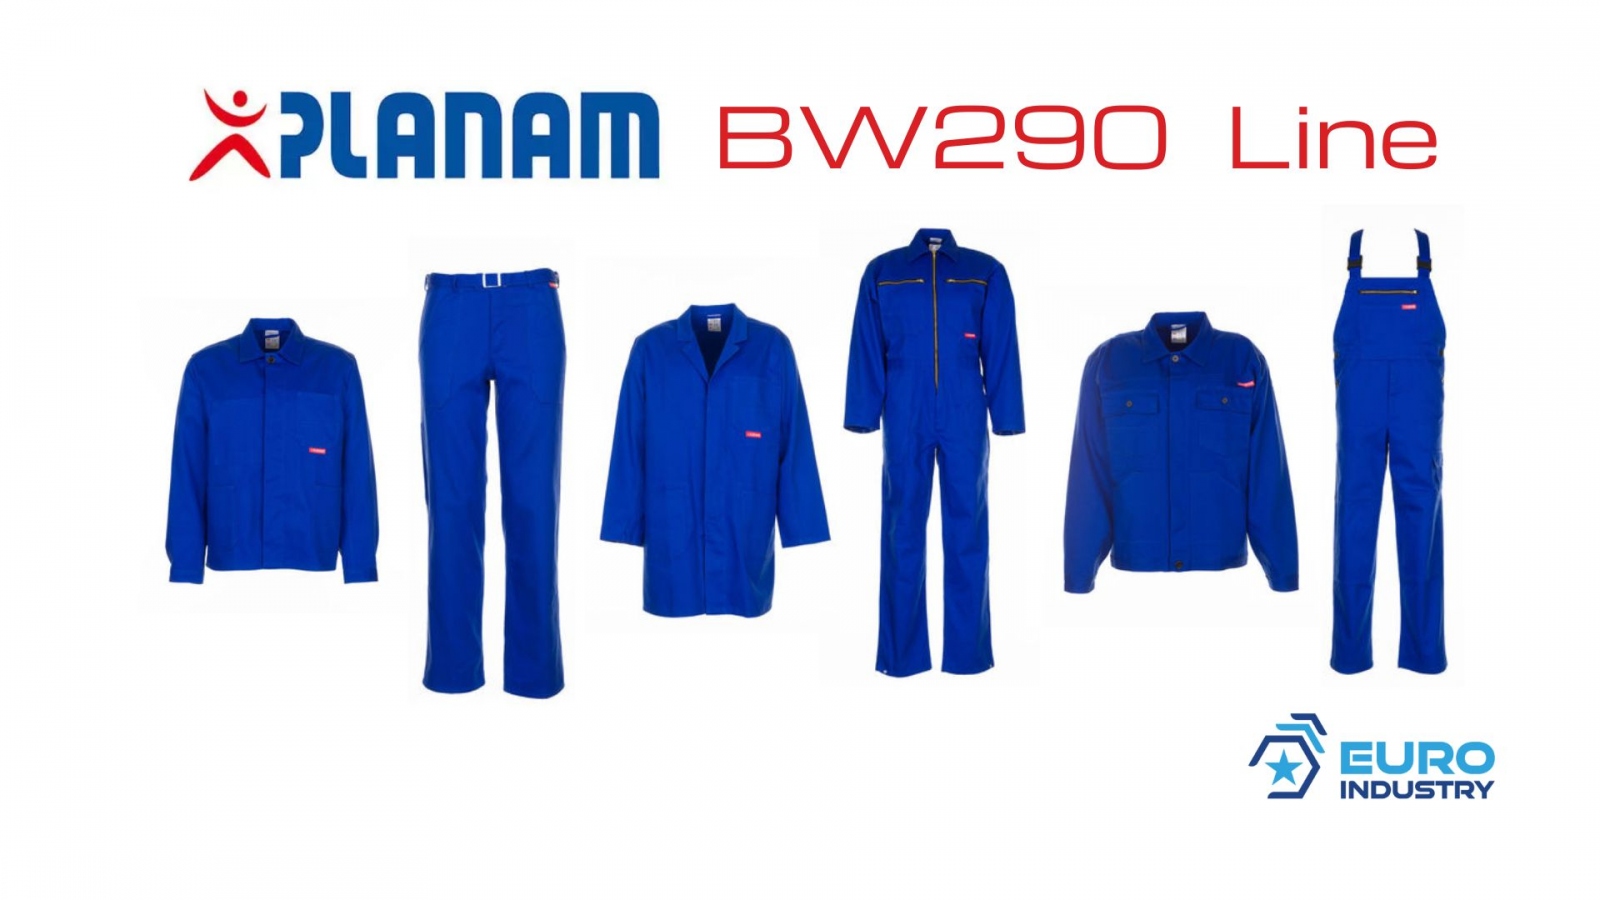 pics/Planam/bw-290/planam-bw-290-linie-kornblau-baumwolle-details.jpg